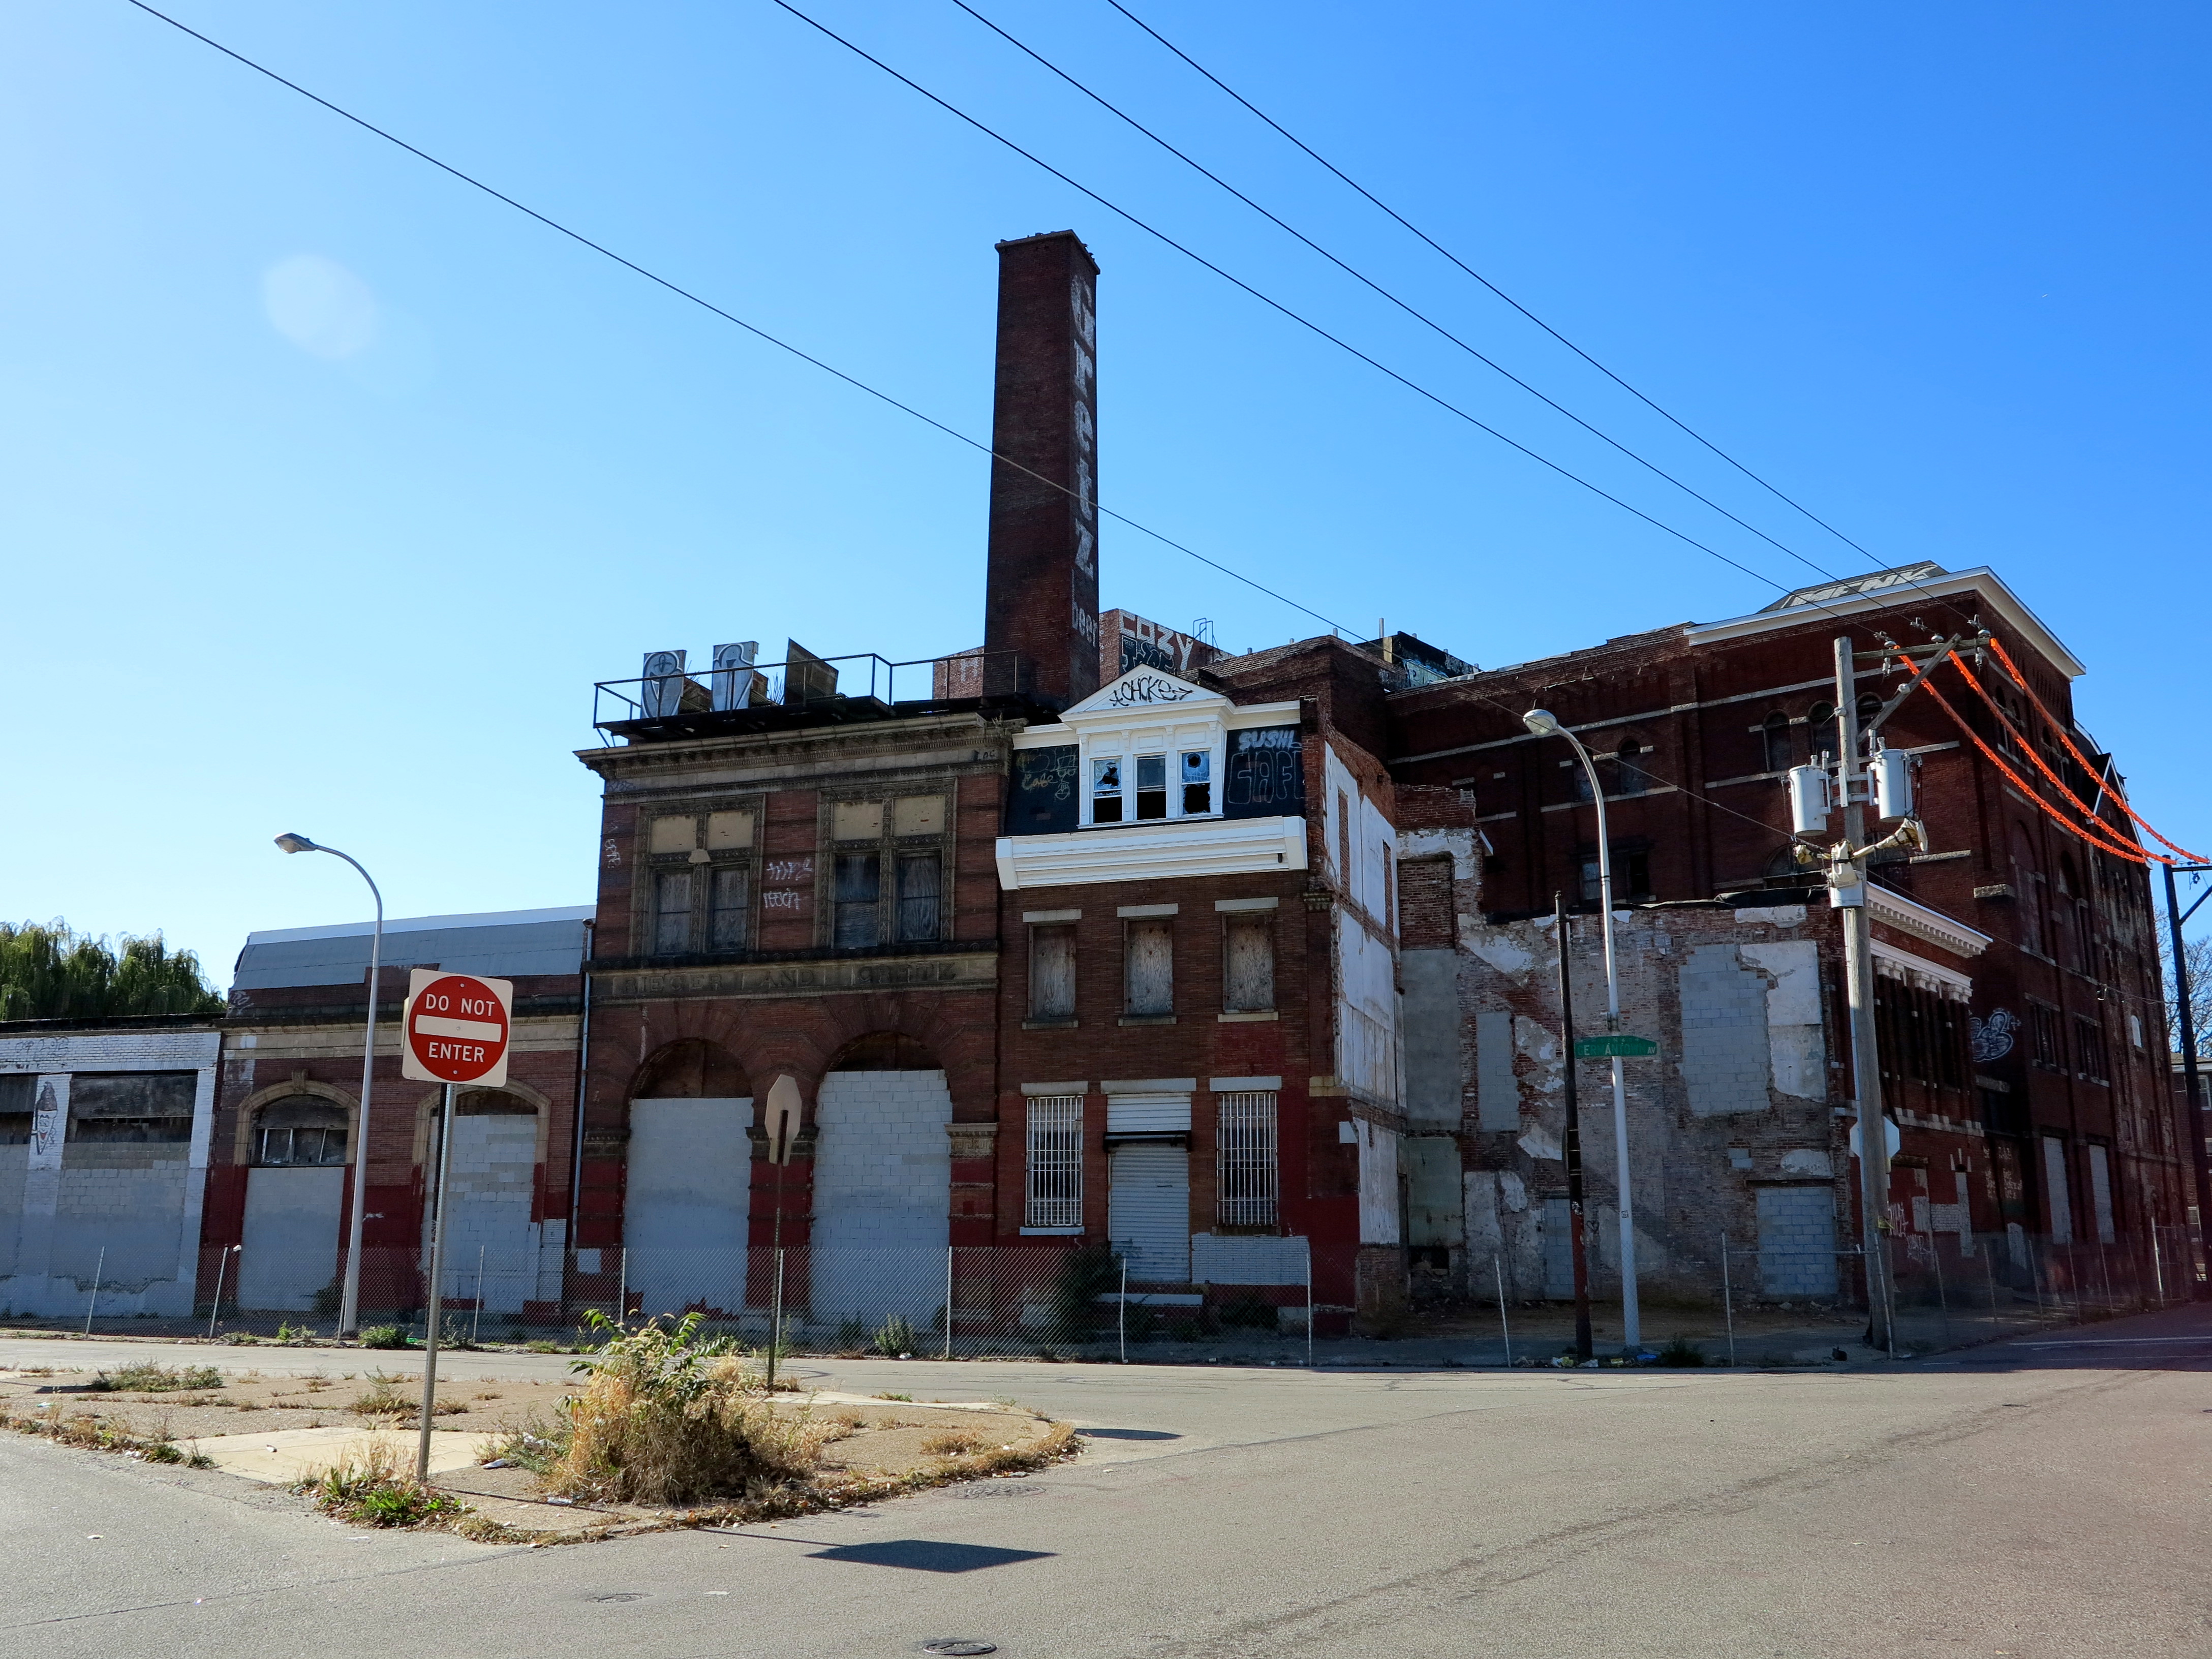 Gretz Brewery complex after the corner building's demolition | November 6, 2013